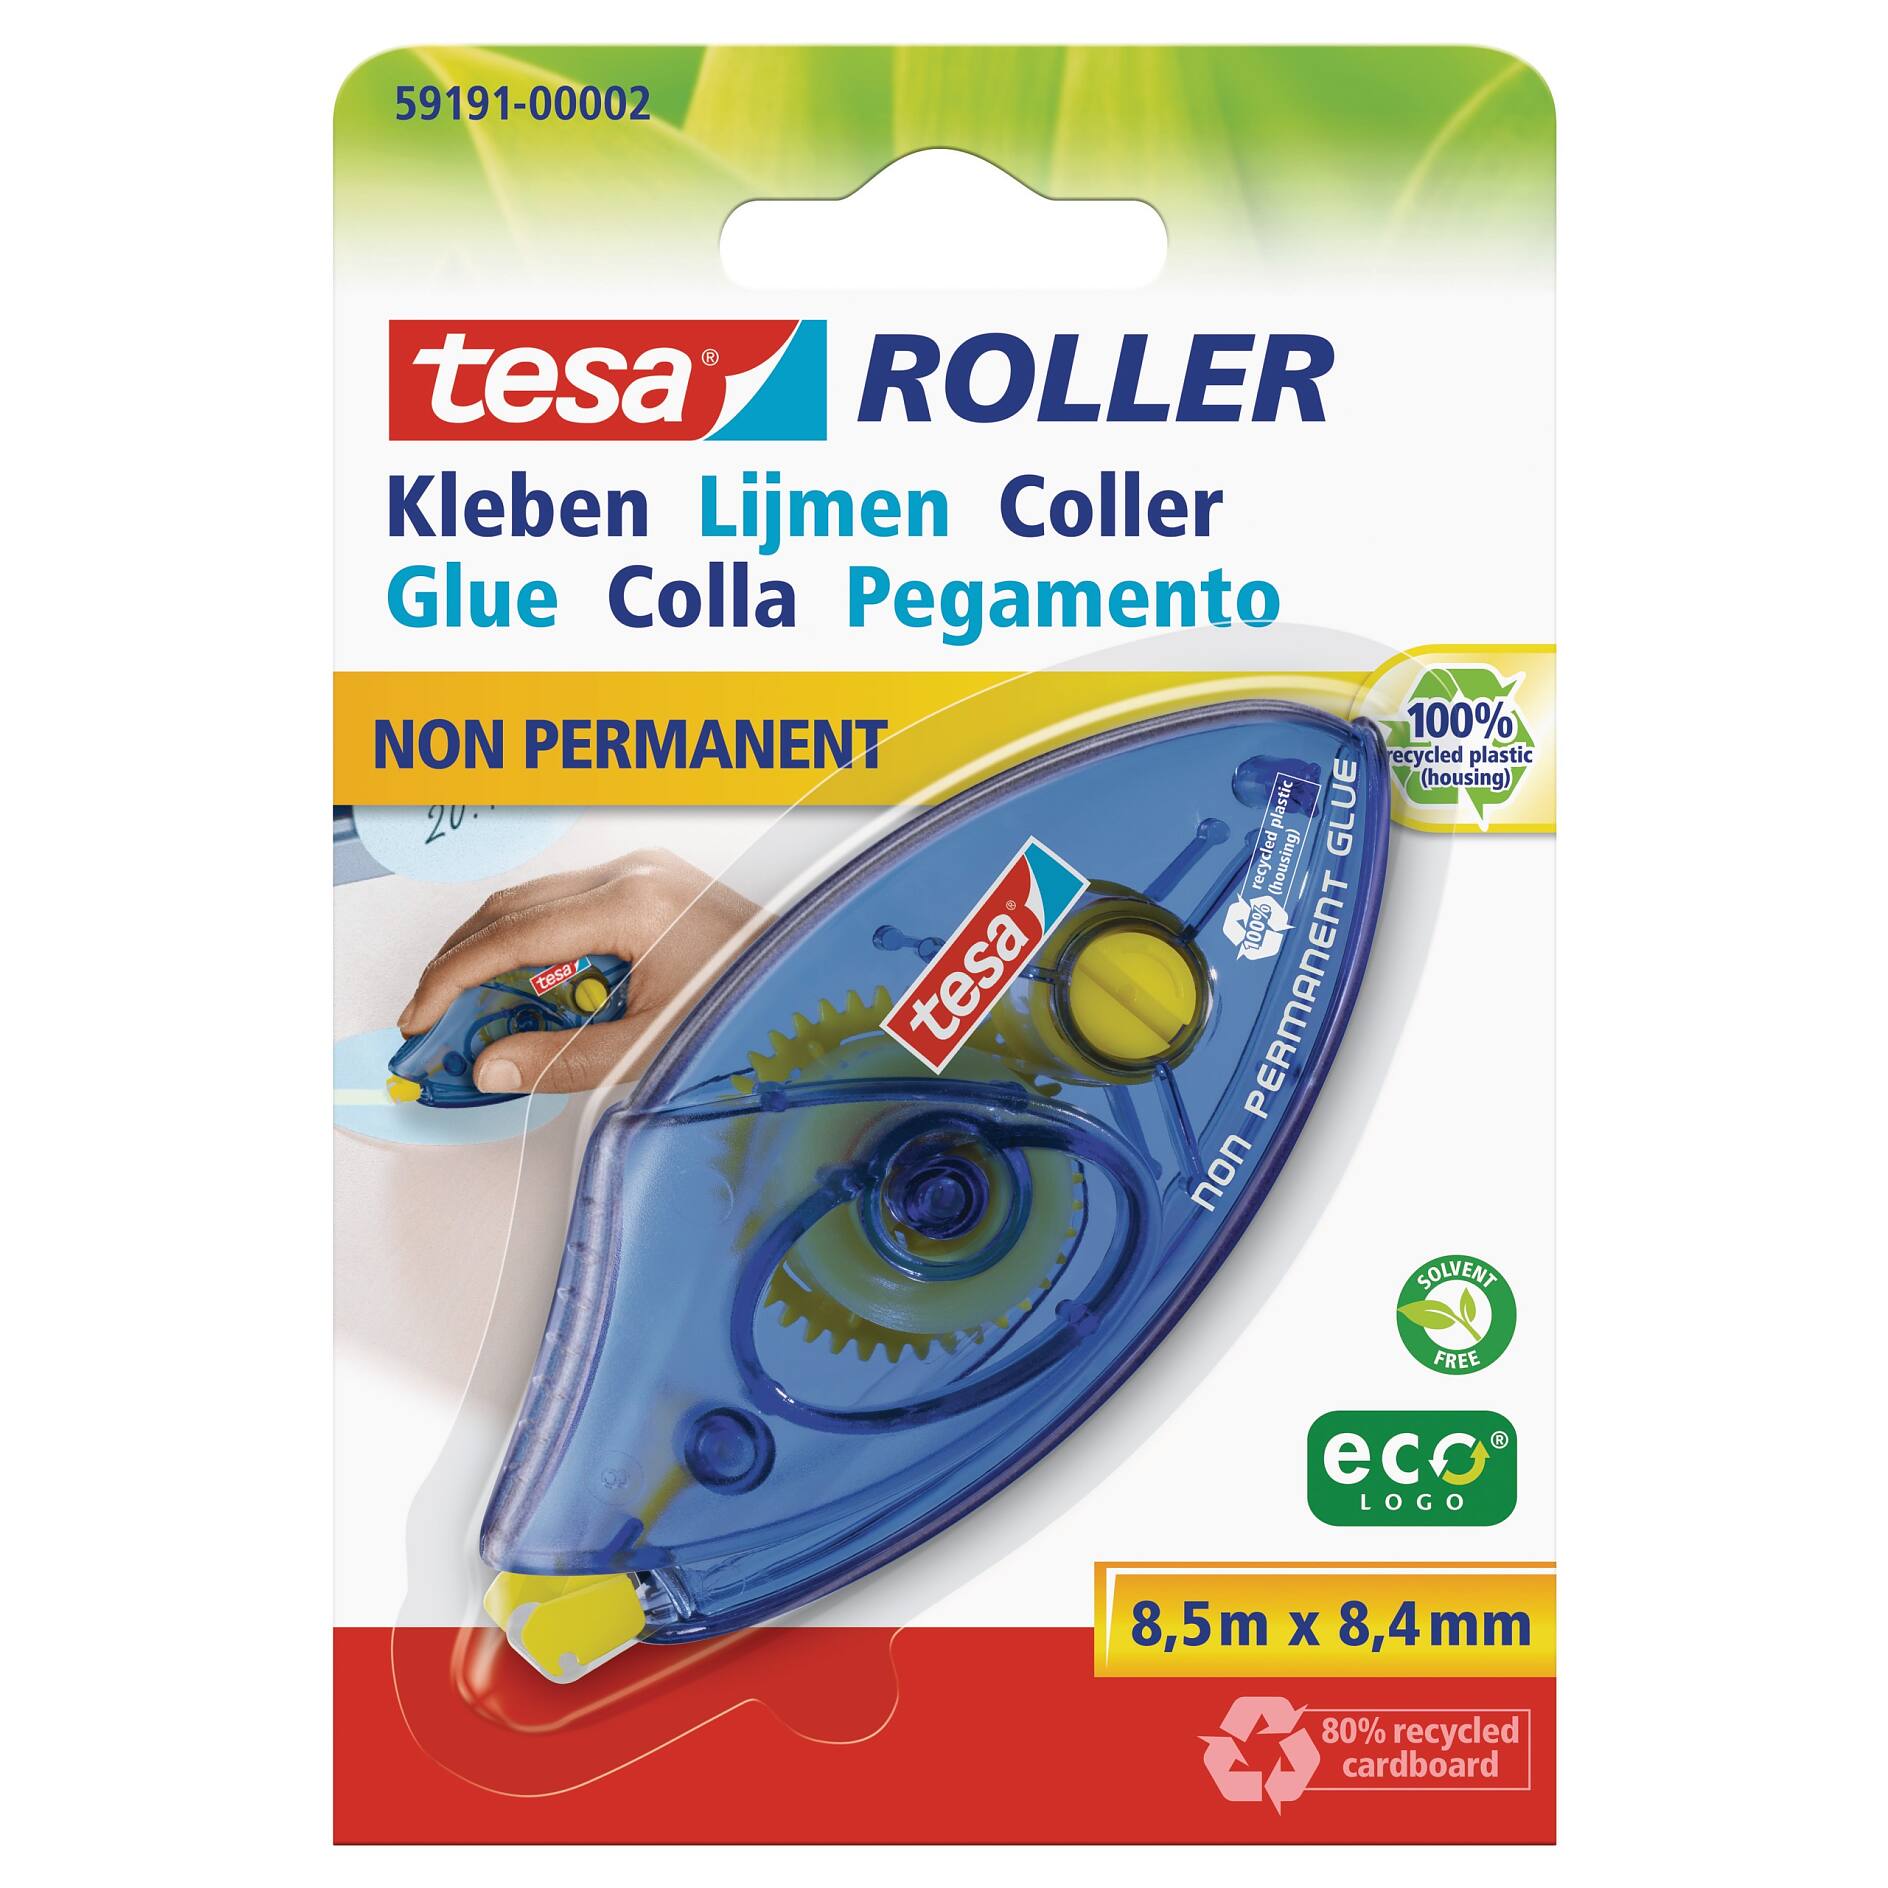 Tesa® Tesa-Roller non permanent, boesner Suisse